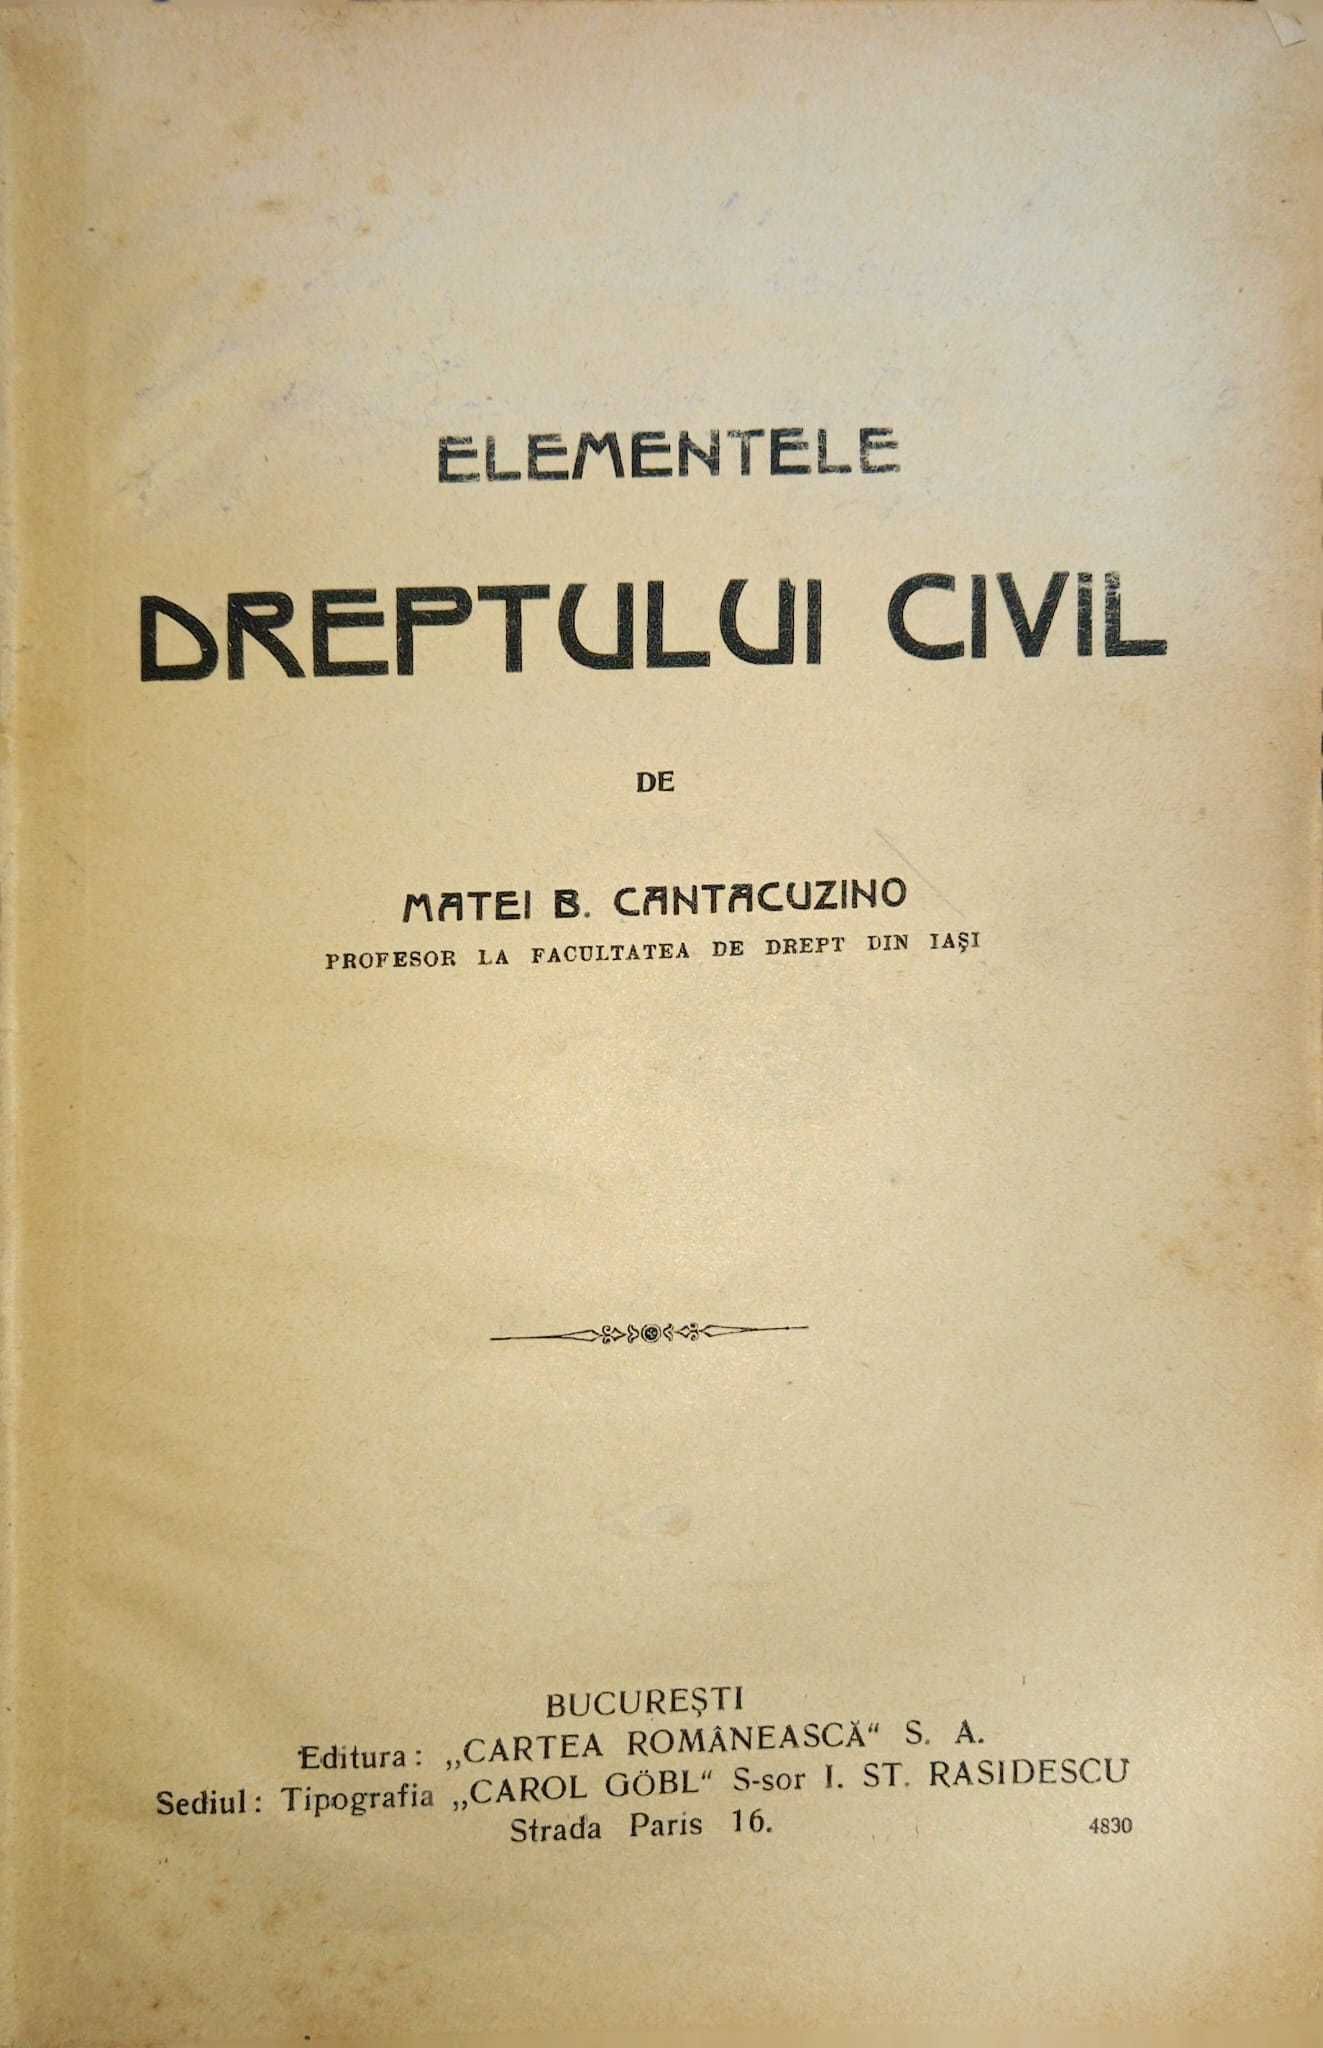 Drept Civil, Elementele dreptului civil, M. B. Cantacuzino, 1926